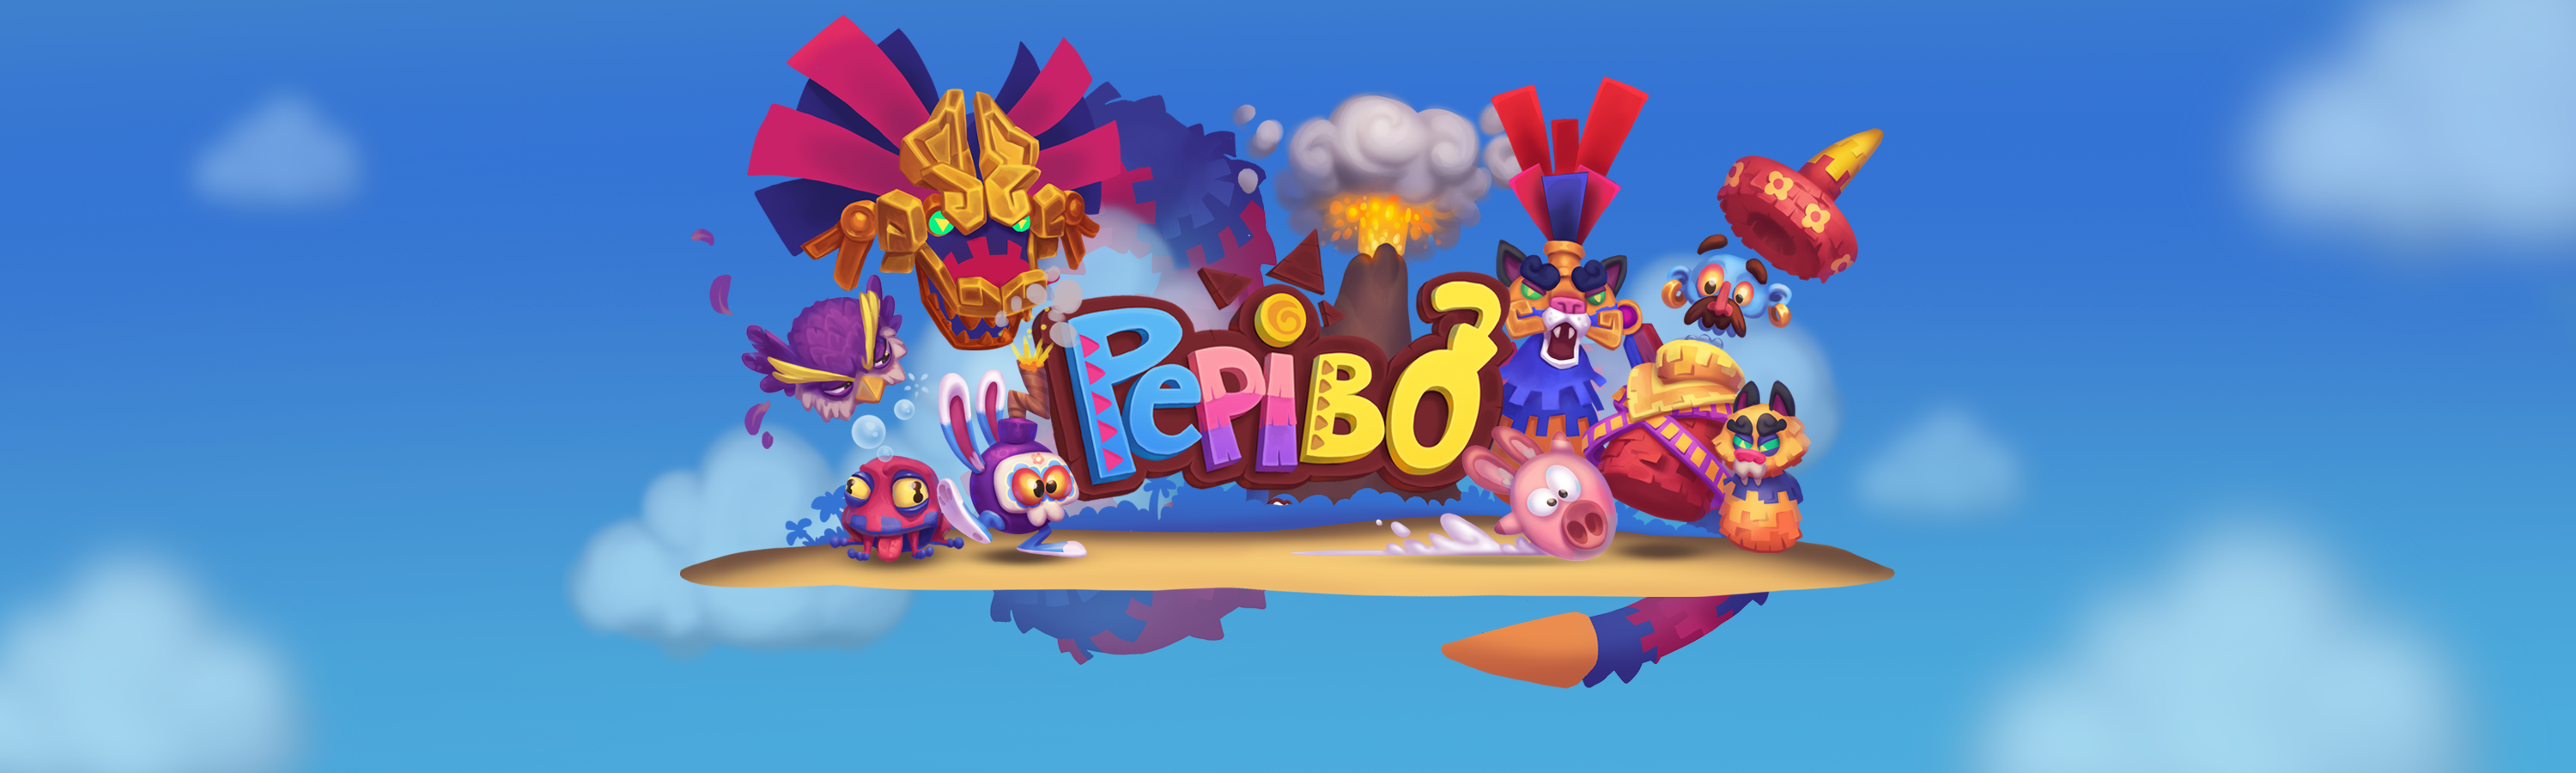 PePiBo - Peregrino Piñata Bowling